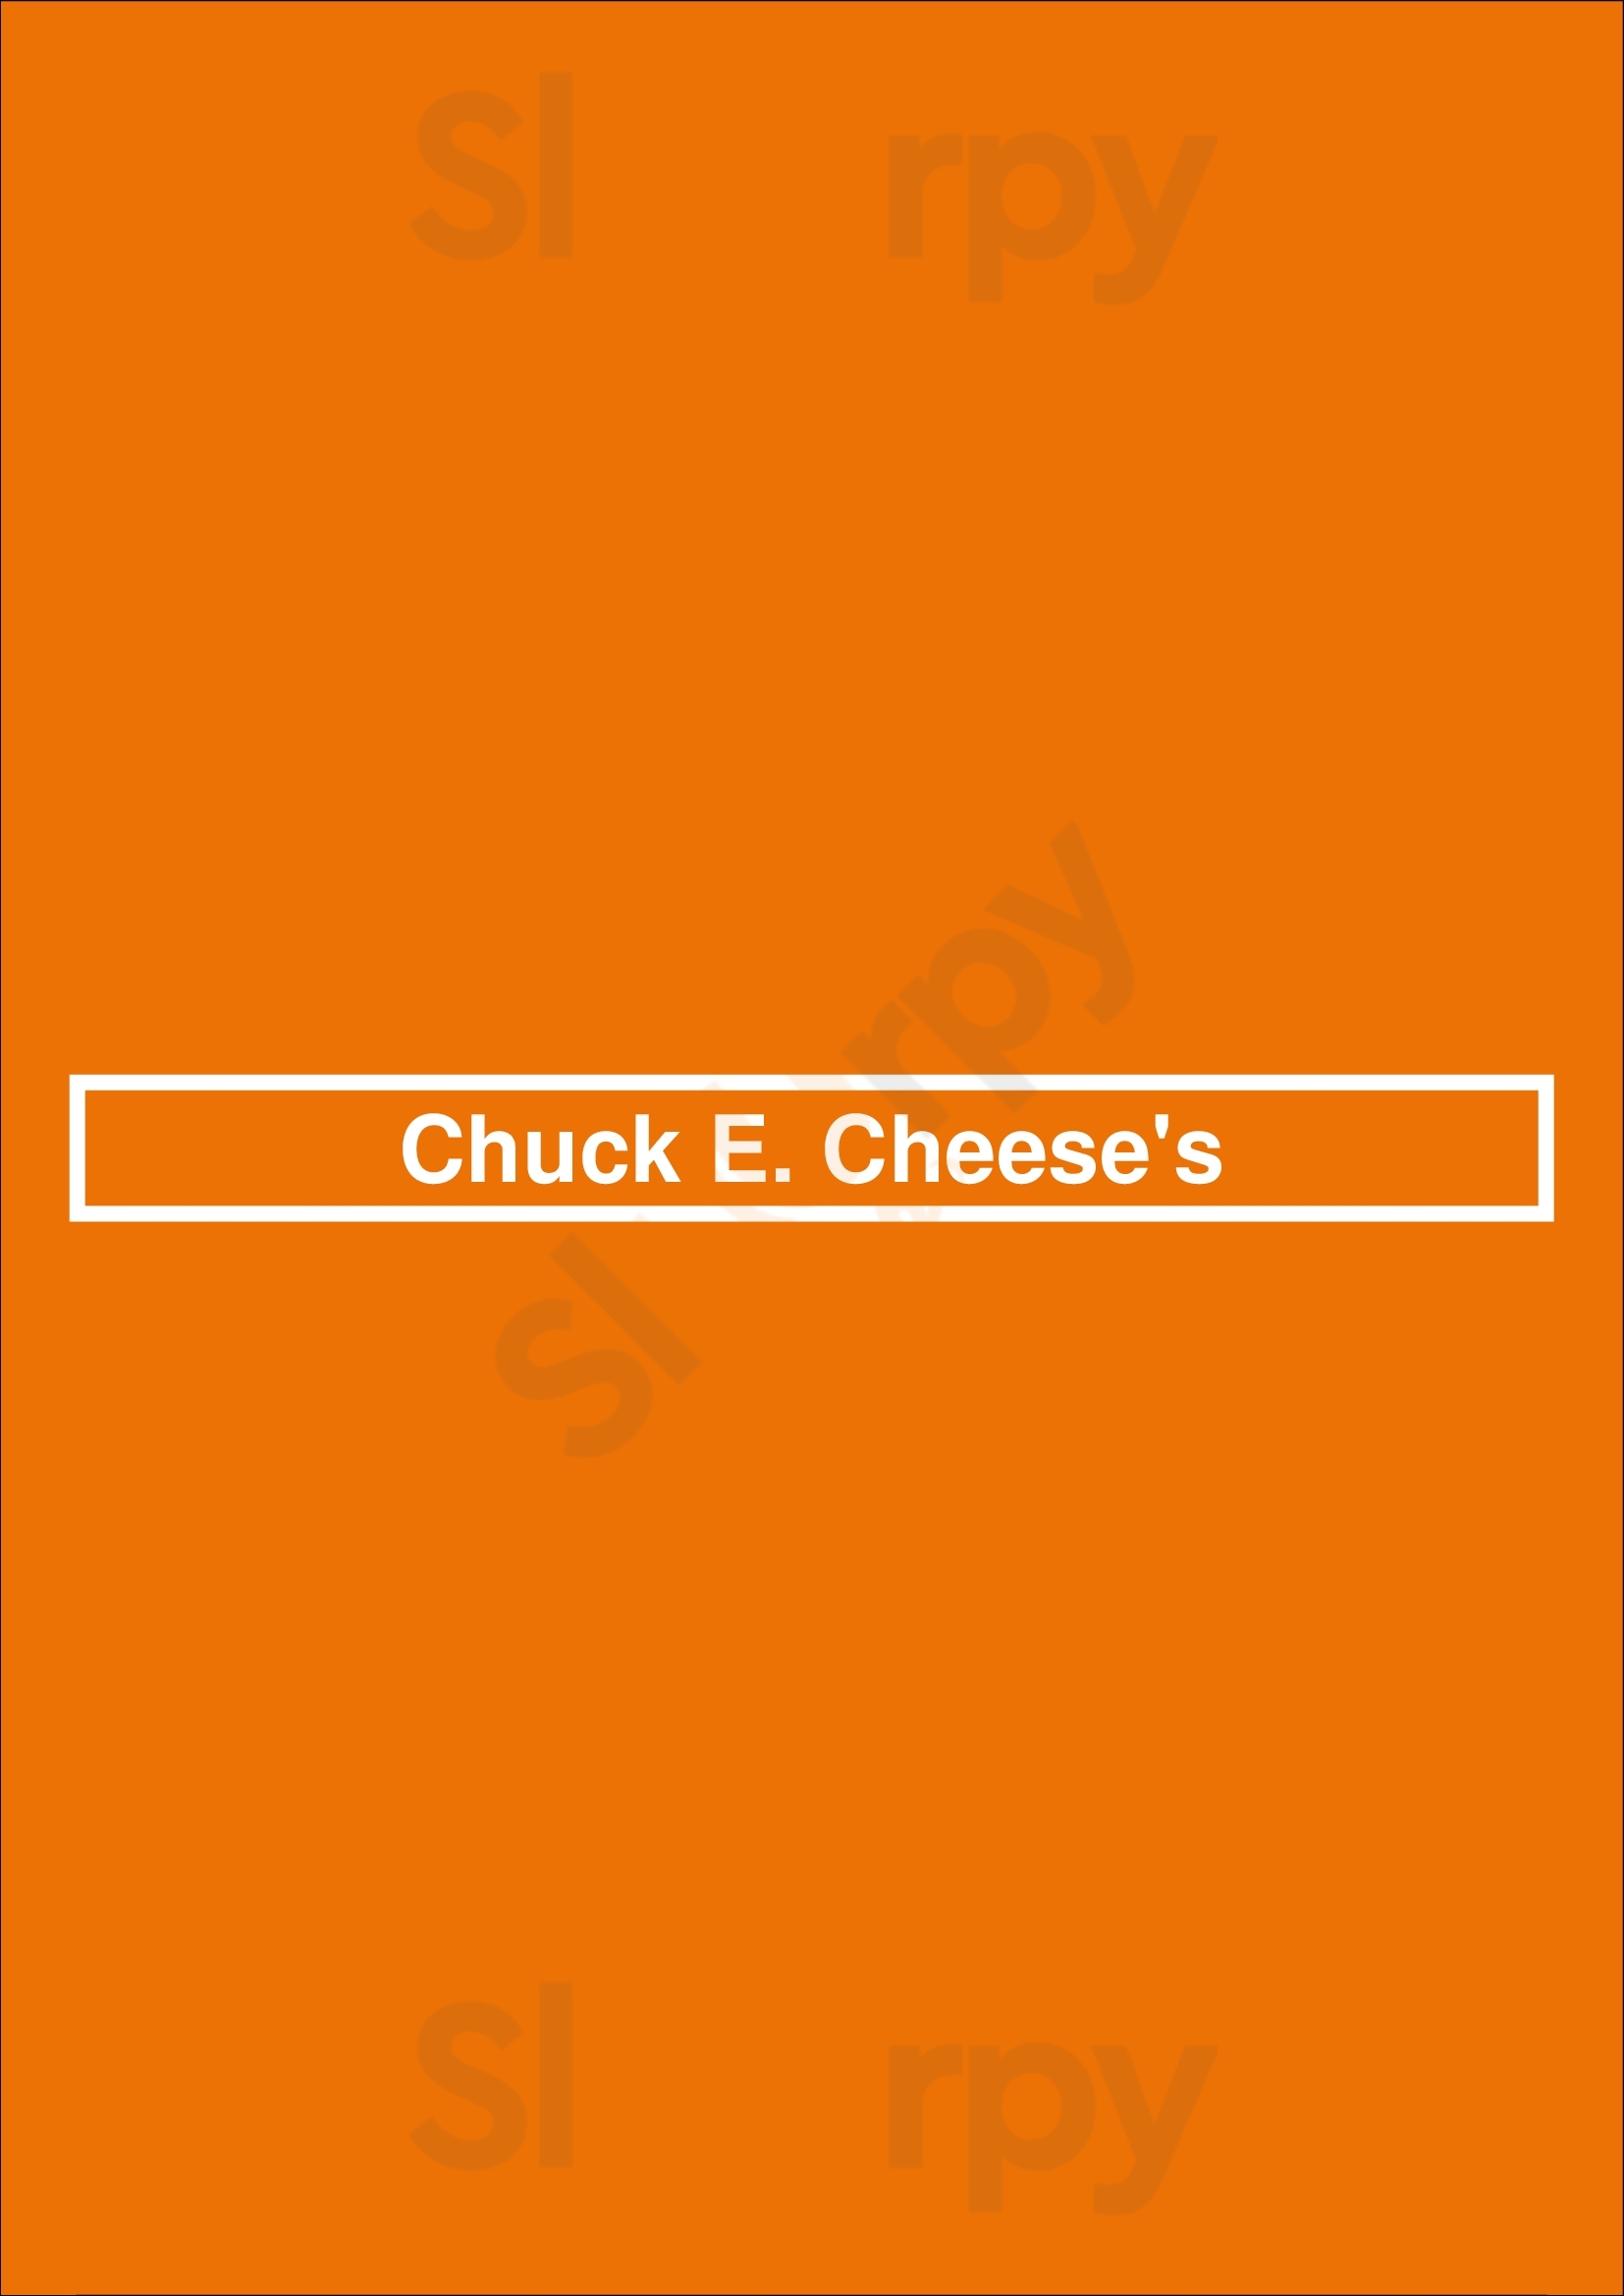 Chuck E. Cheese Plano Menu - 1